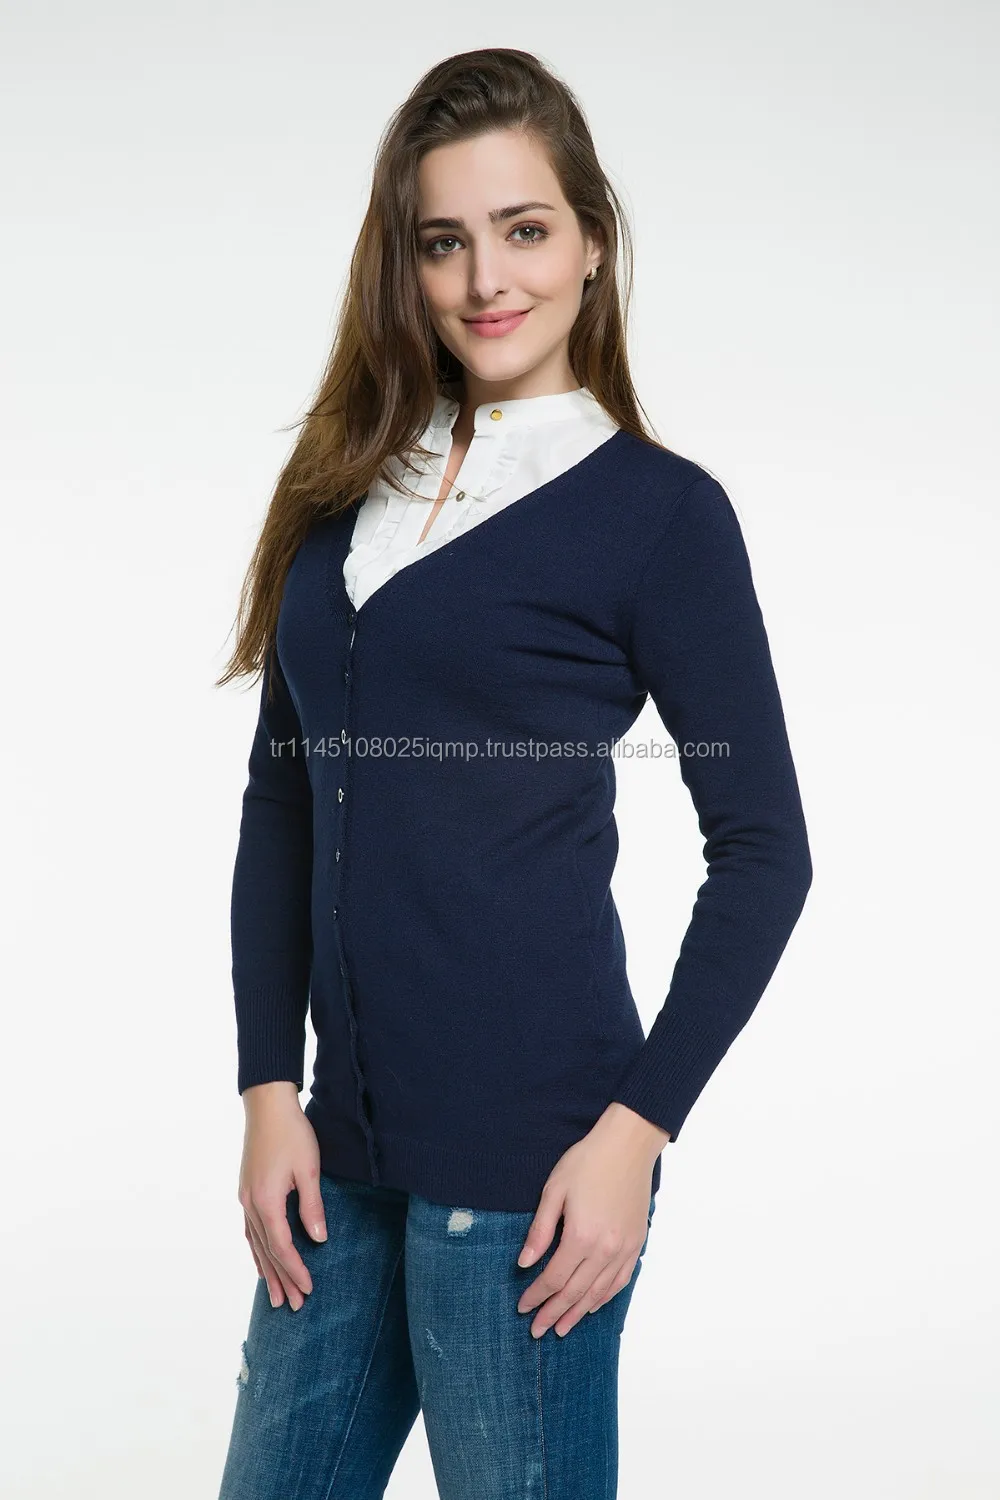 Shipping wholesale cardigan sweaters for women cheap shipping